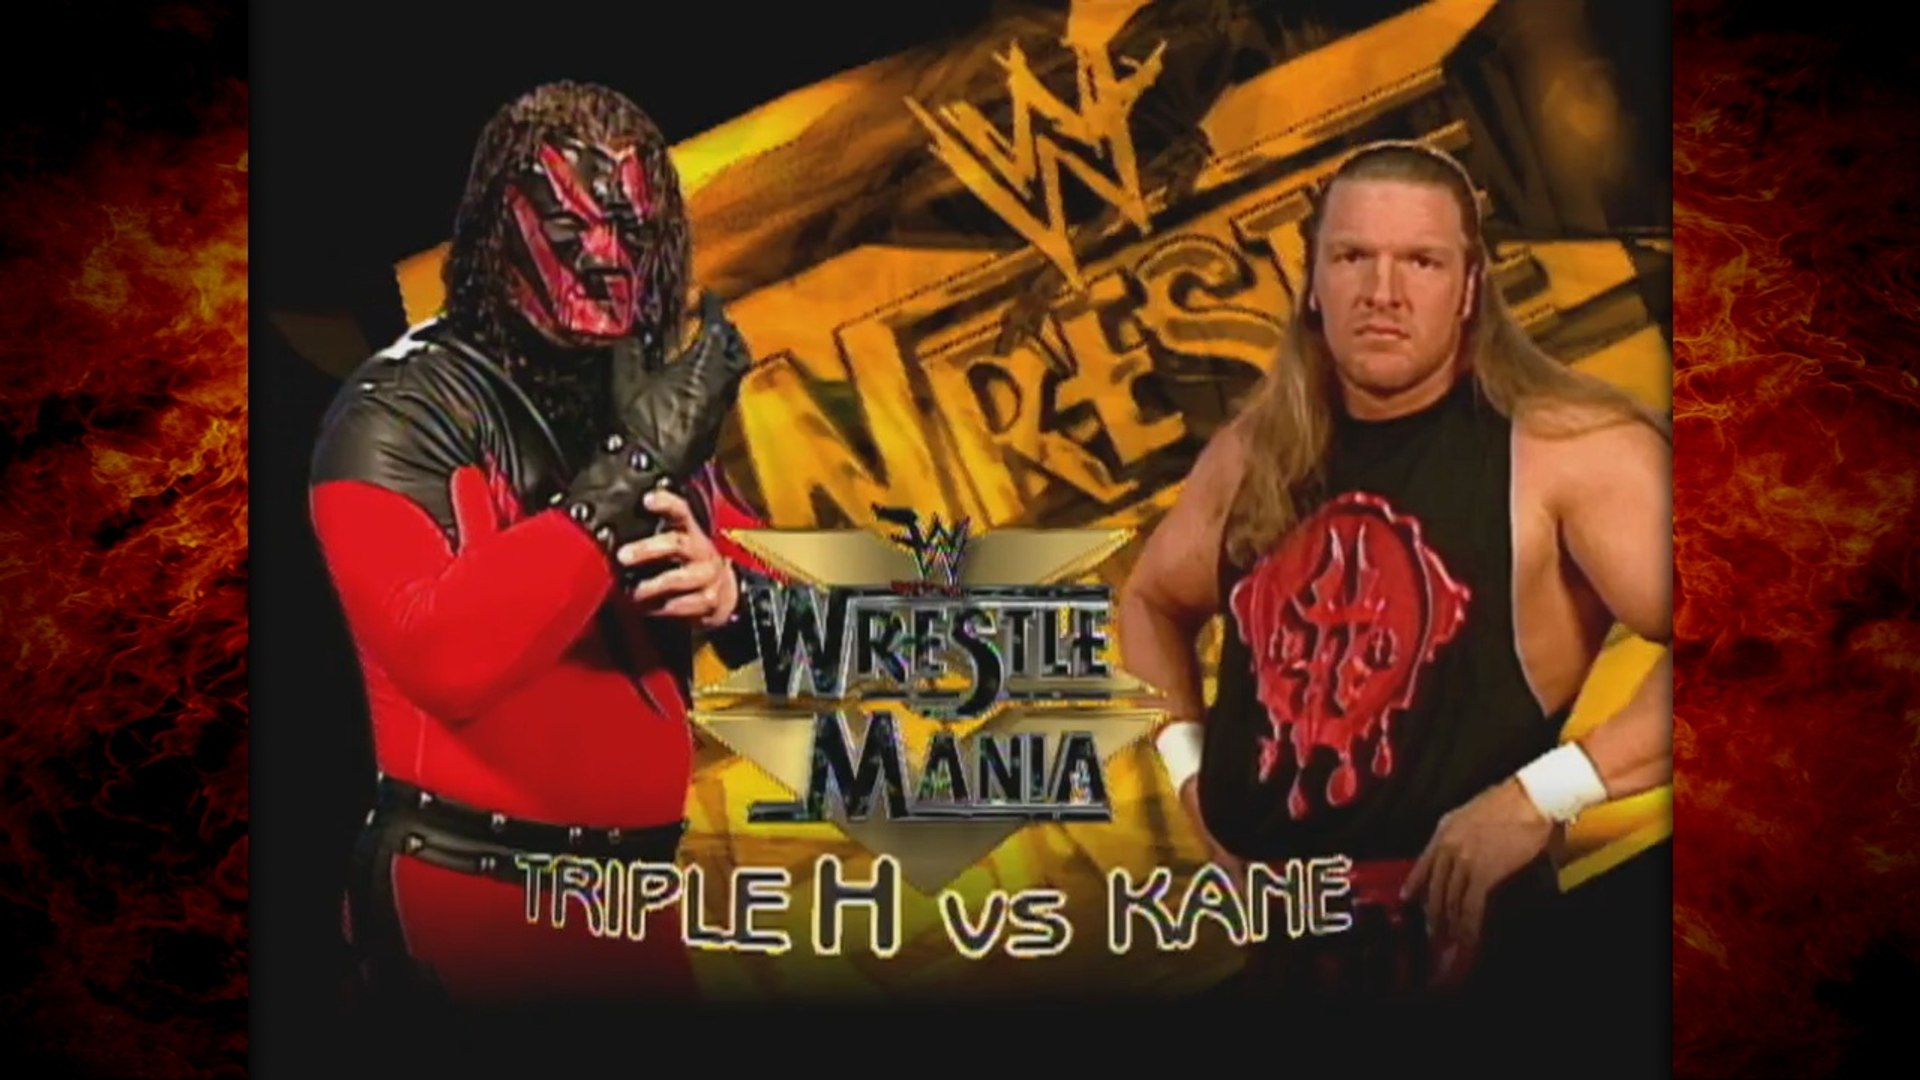 Kane Vs Triple H Wrestlemania Xv 3 28 99 Video Dailymotion